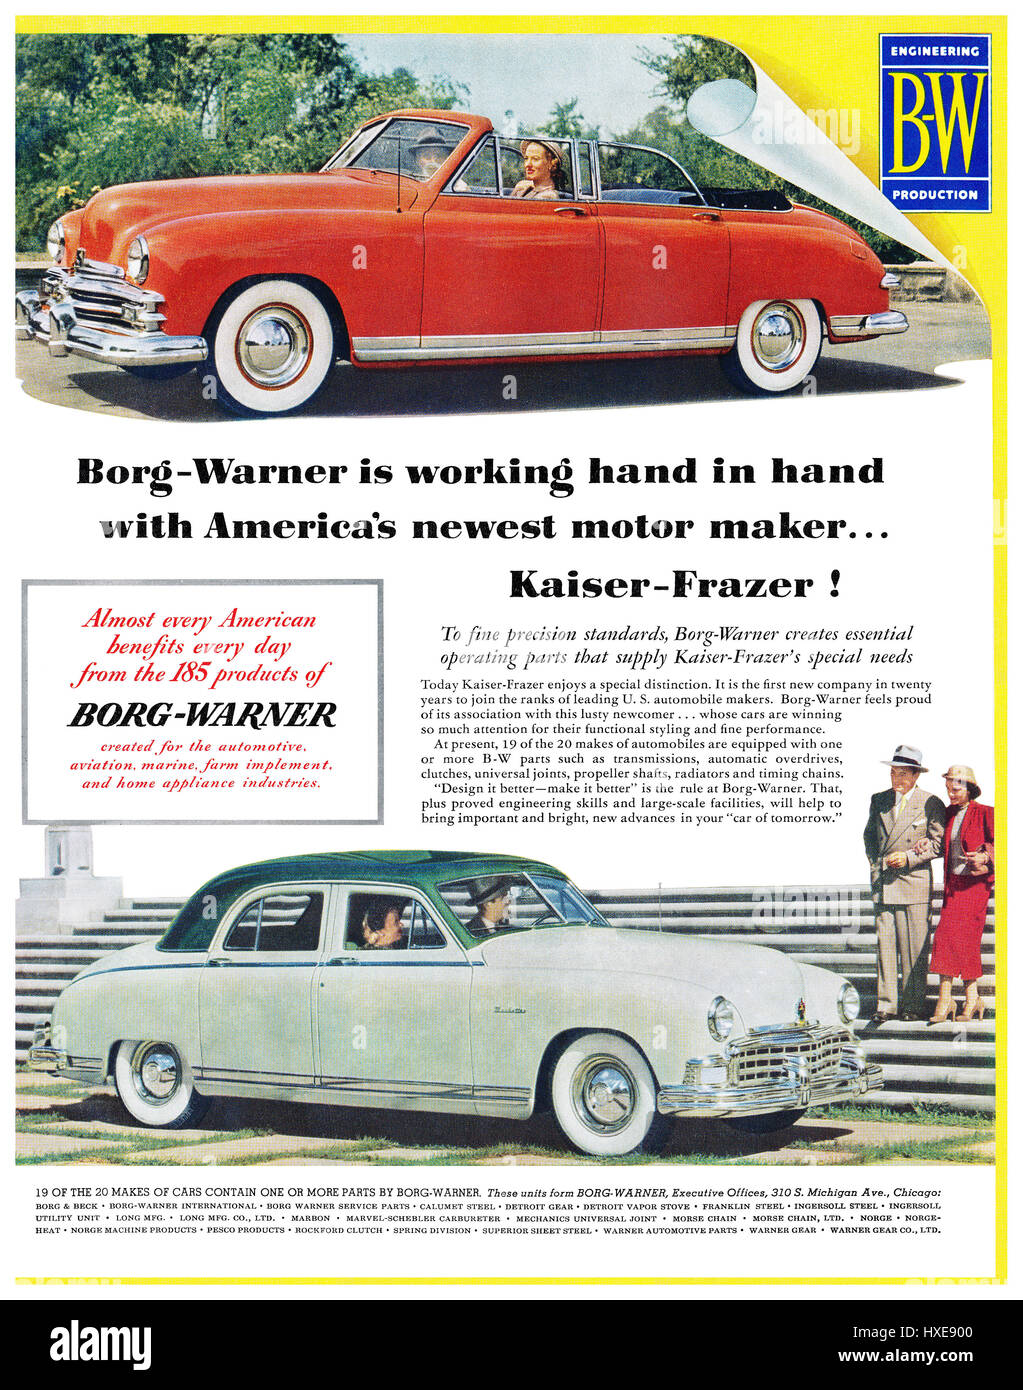 1949 U.S. advertisement for Borg-Warner engineering. Stock Photo